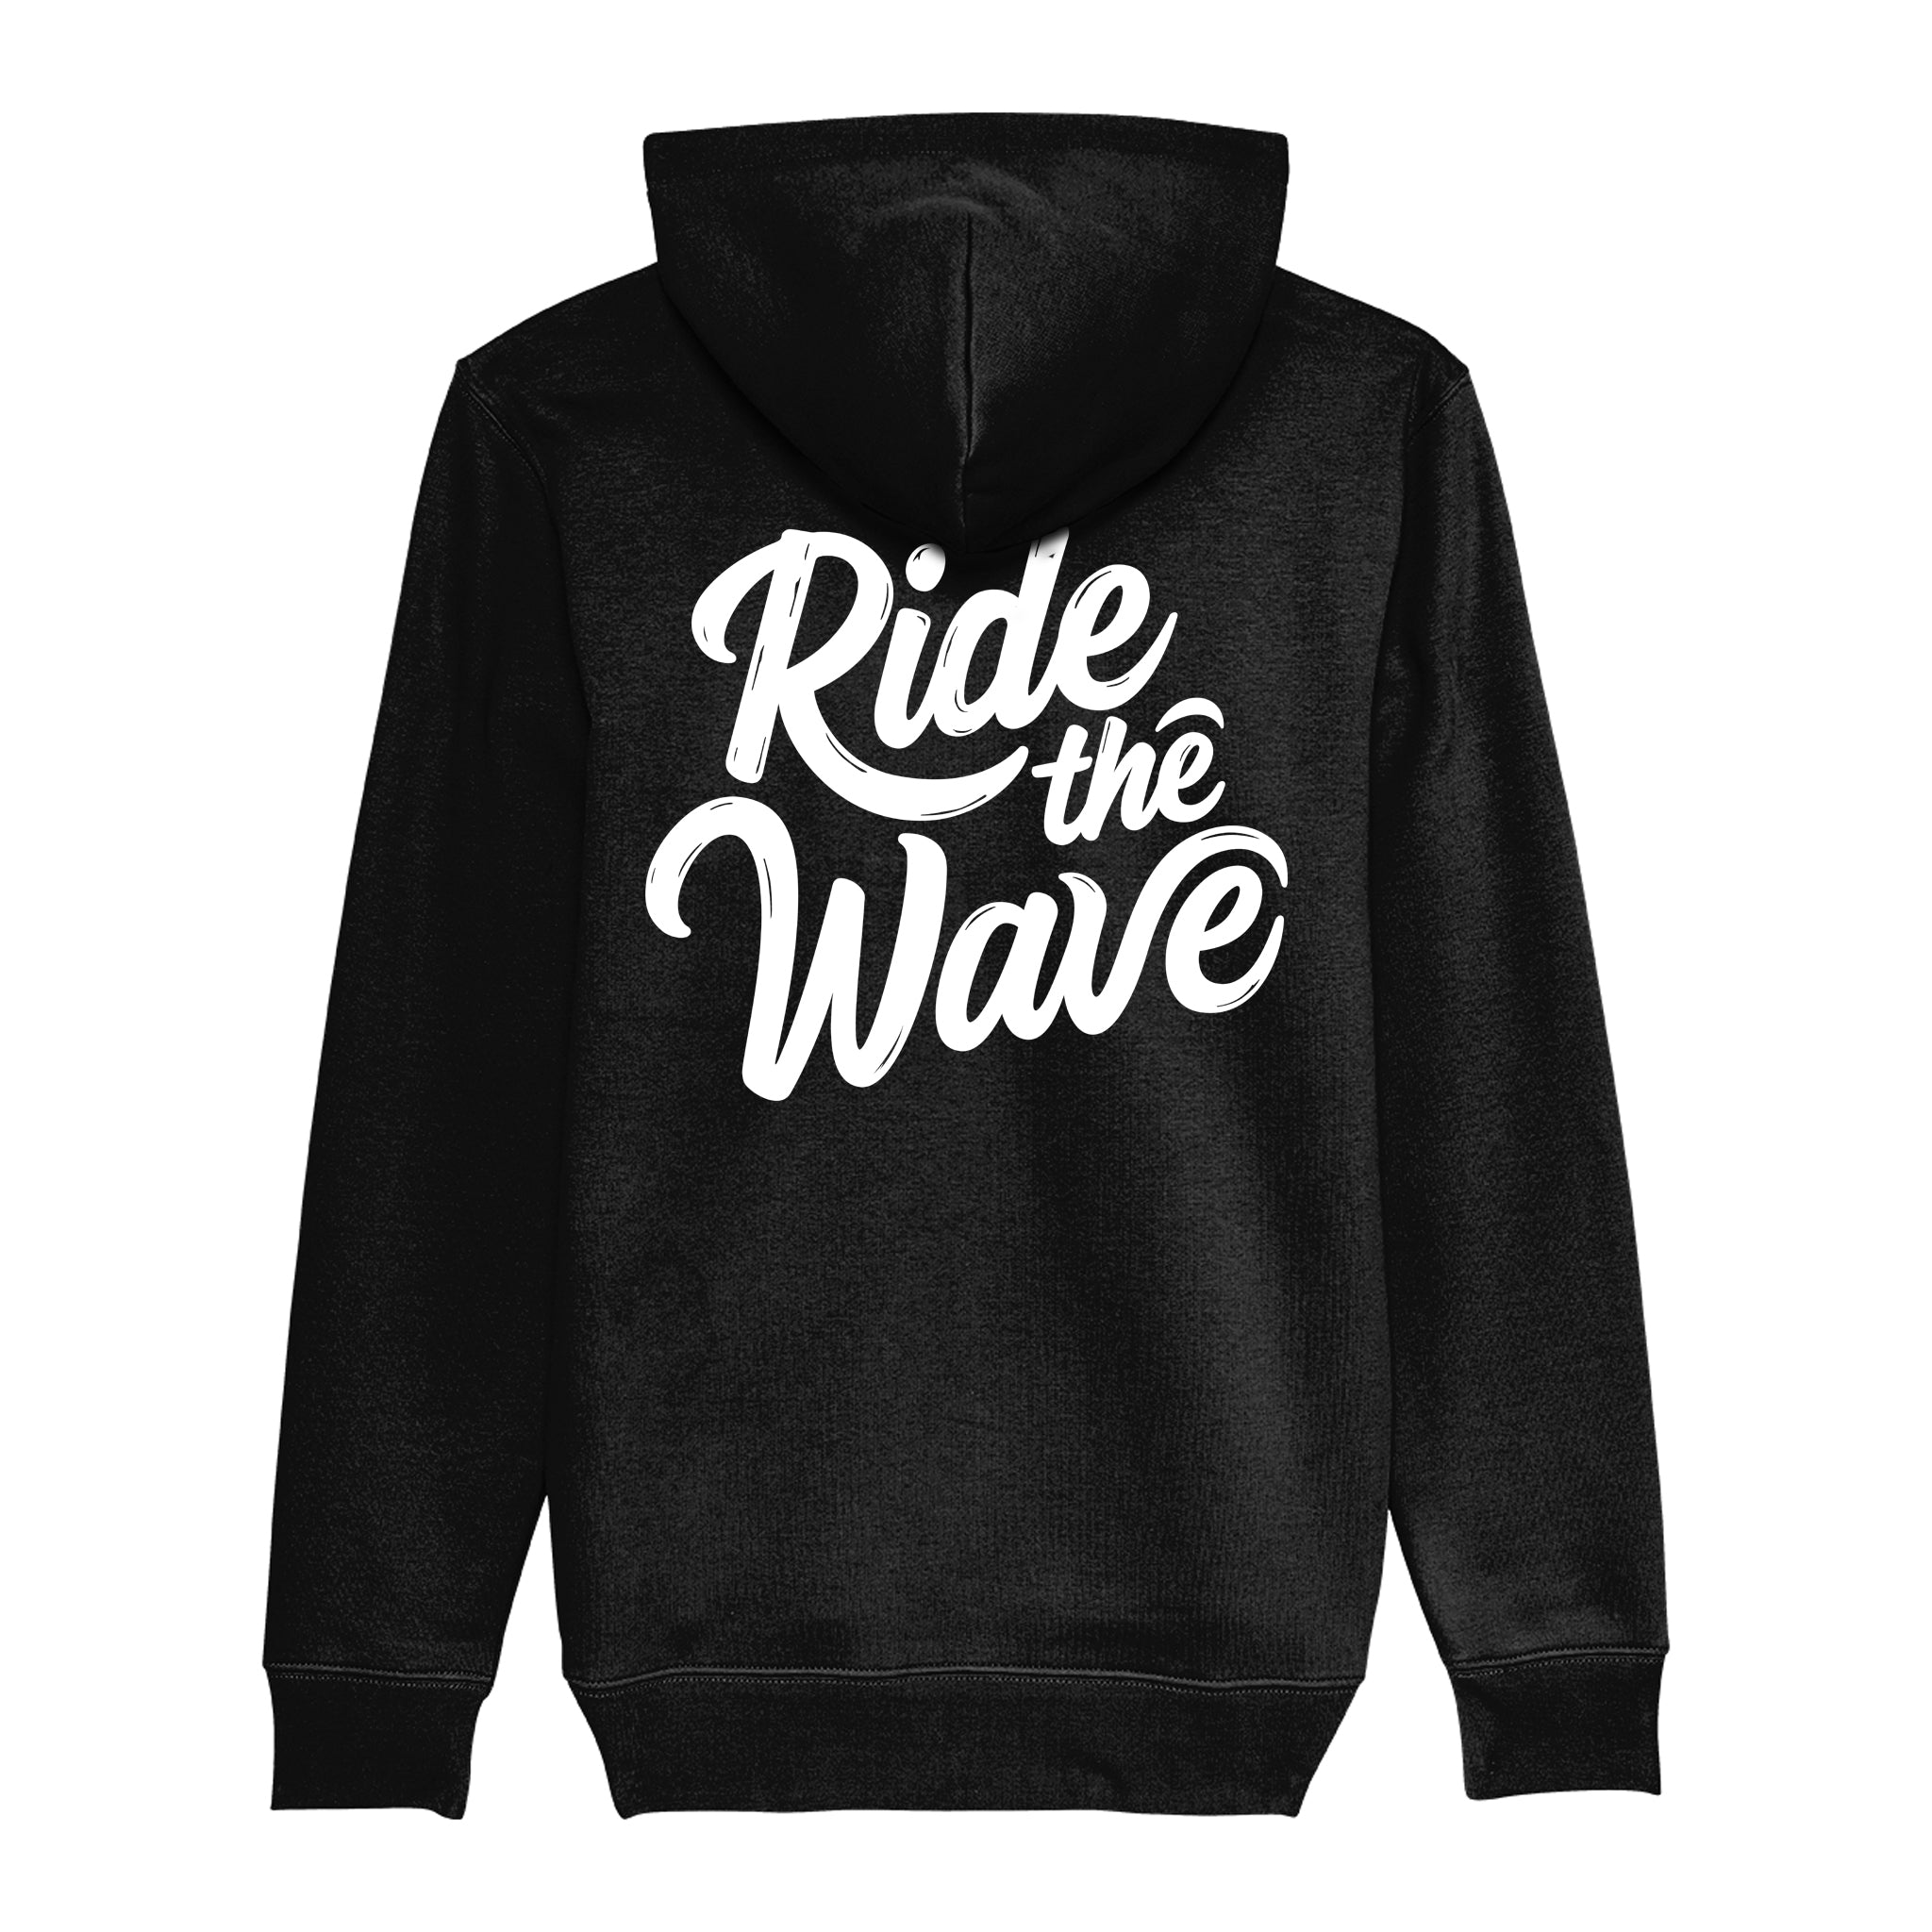 'Ride The Wave' Hoodies